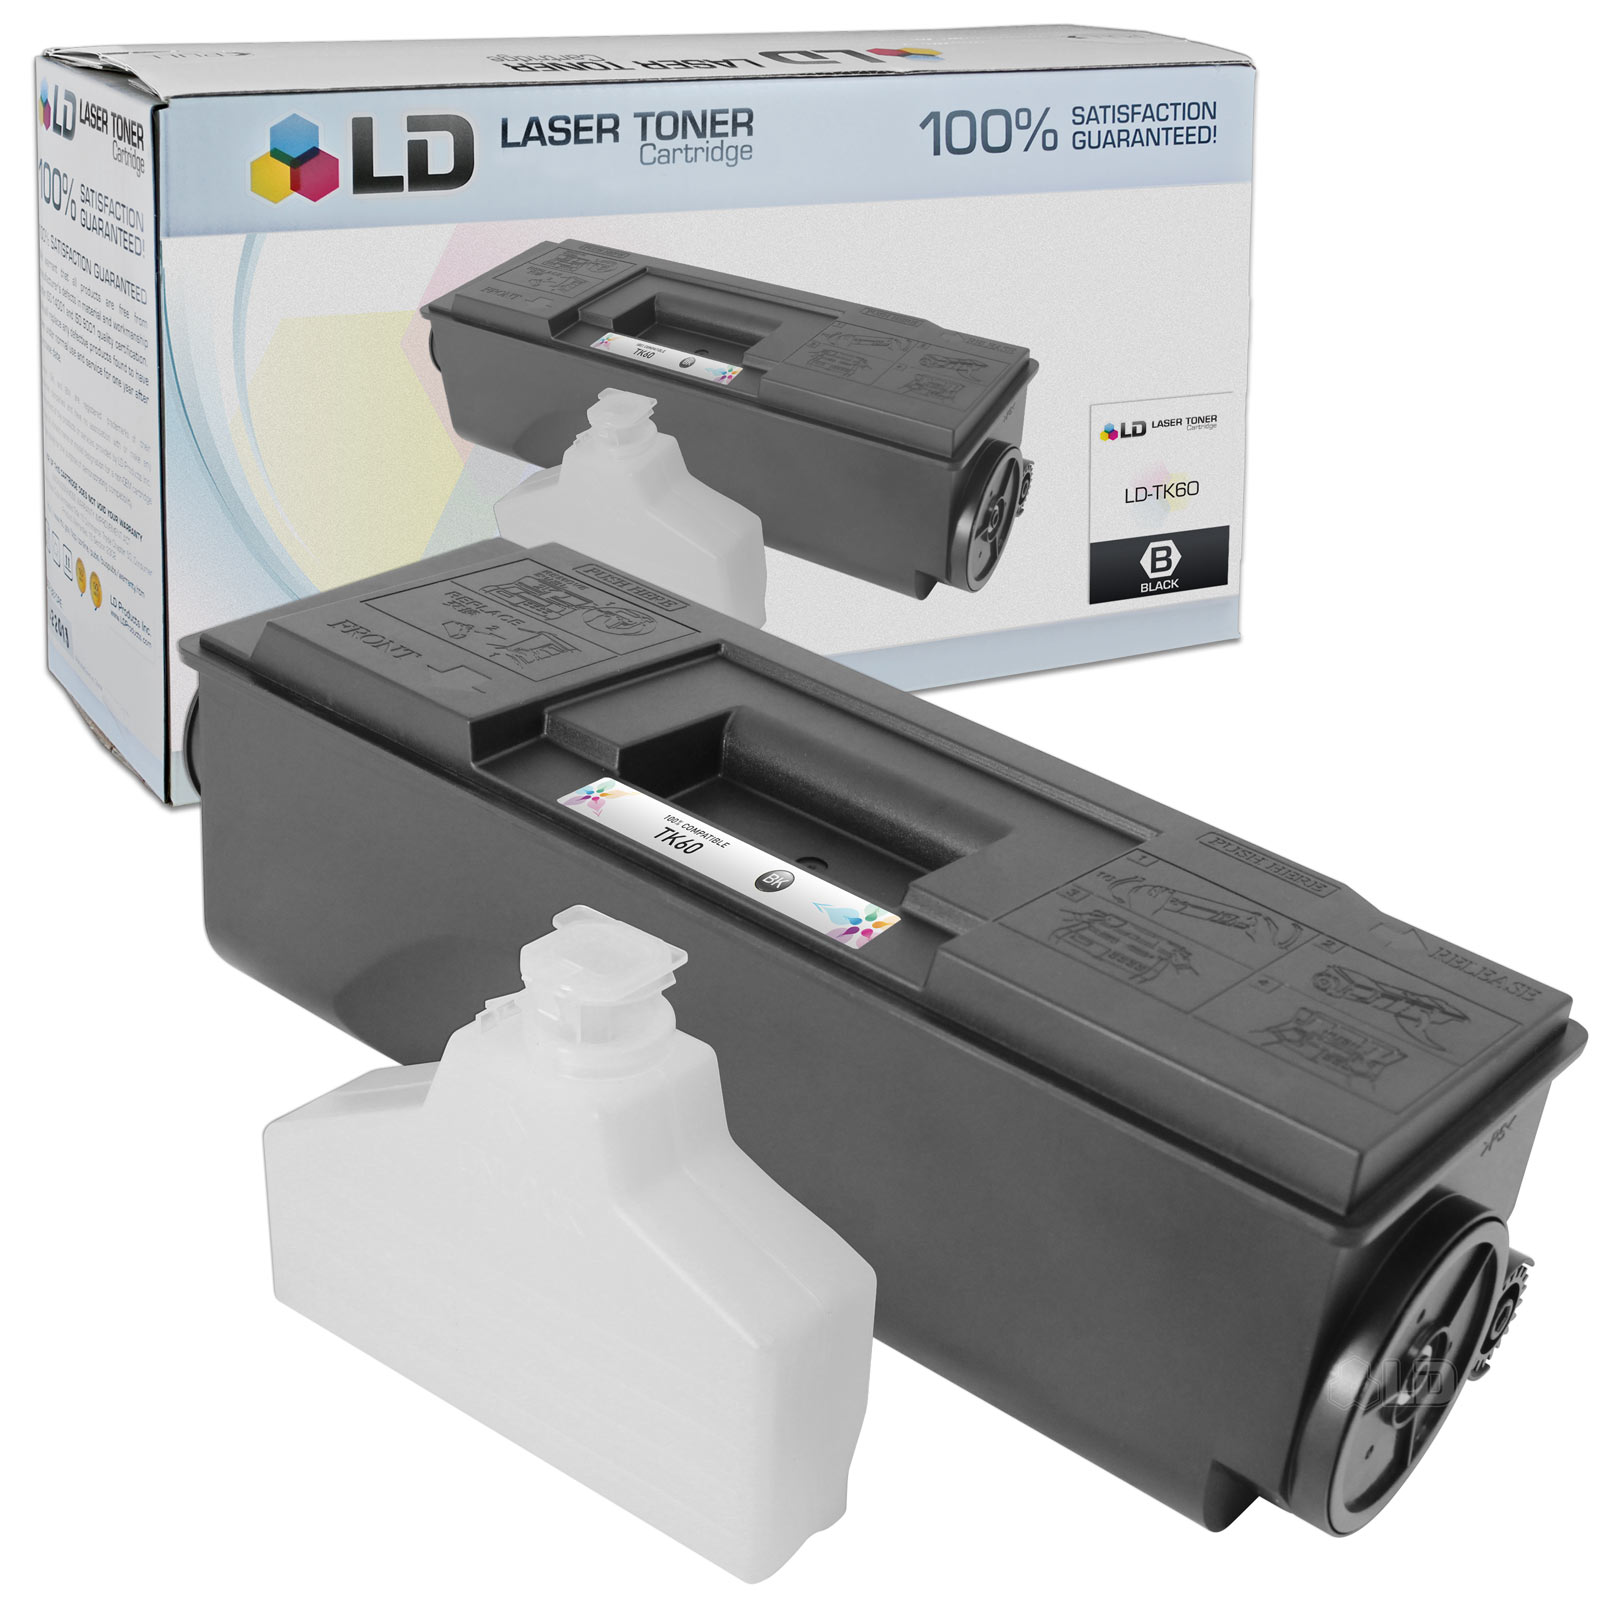 LD Kyocera Mita Compatible TK60 Black Laser Toner Cartridge for use in Kyocera Mita FS s: 1800, 1800 N, 1800 N Plus, 1800 Plus, 1800 TN PLUS, 3800 D, 3800 DTN, 3800 N, & 3800 TN s - image 1 of 1